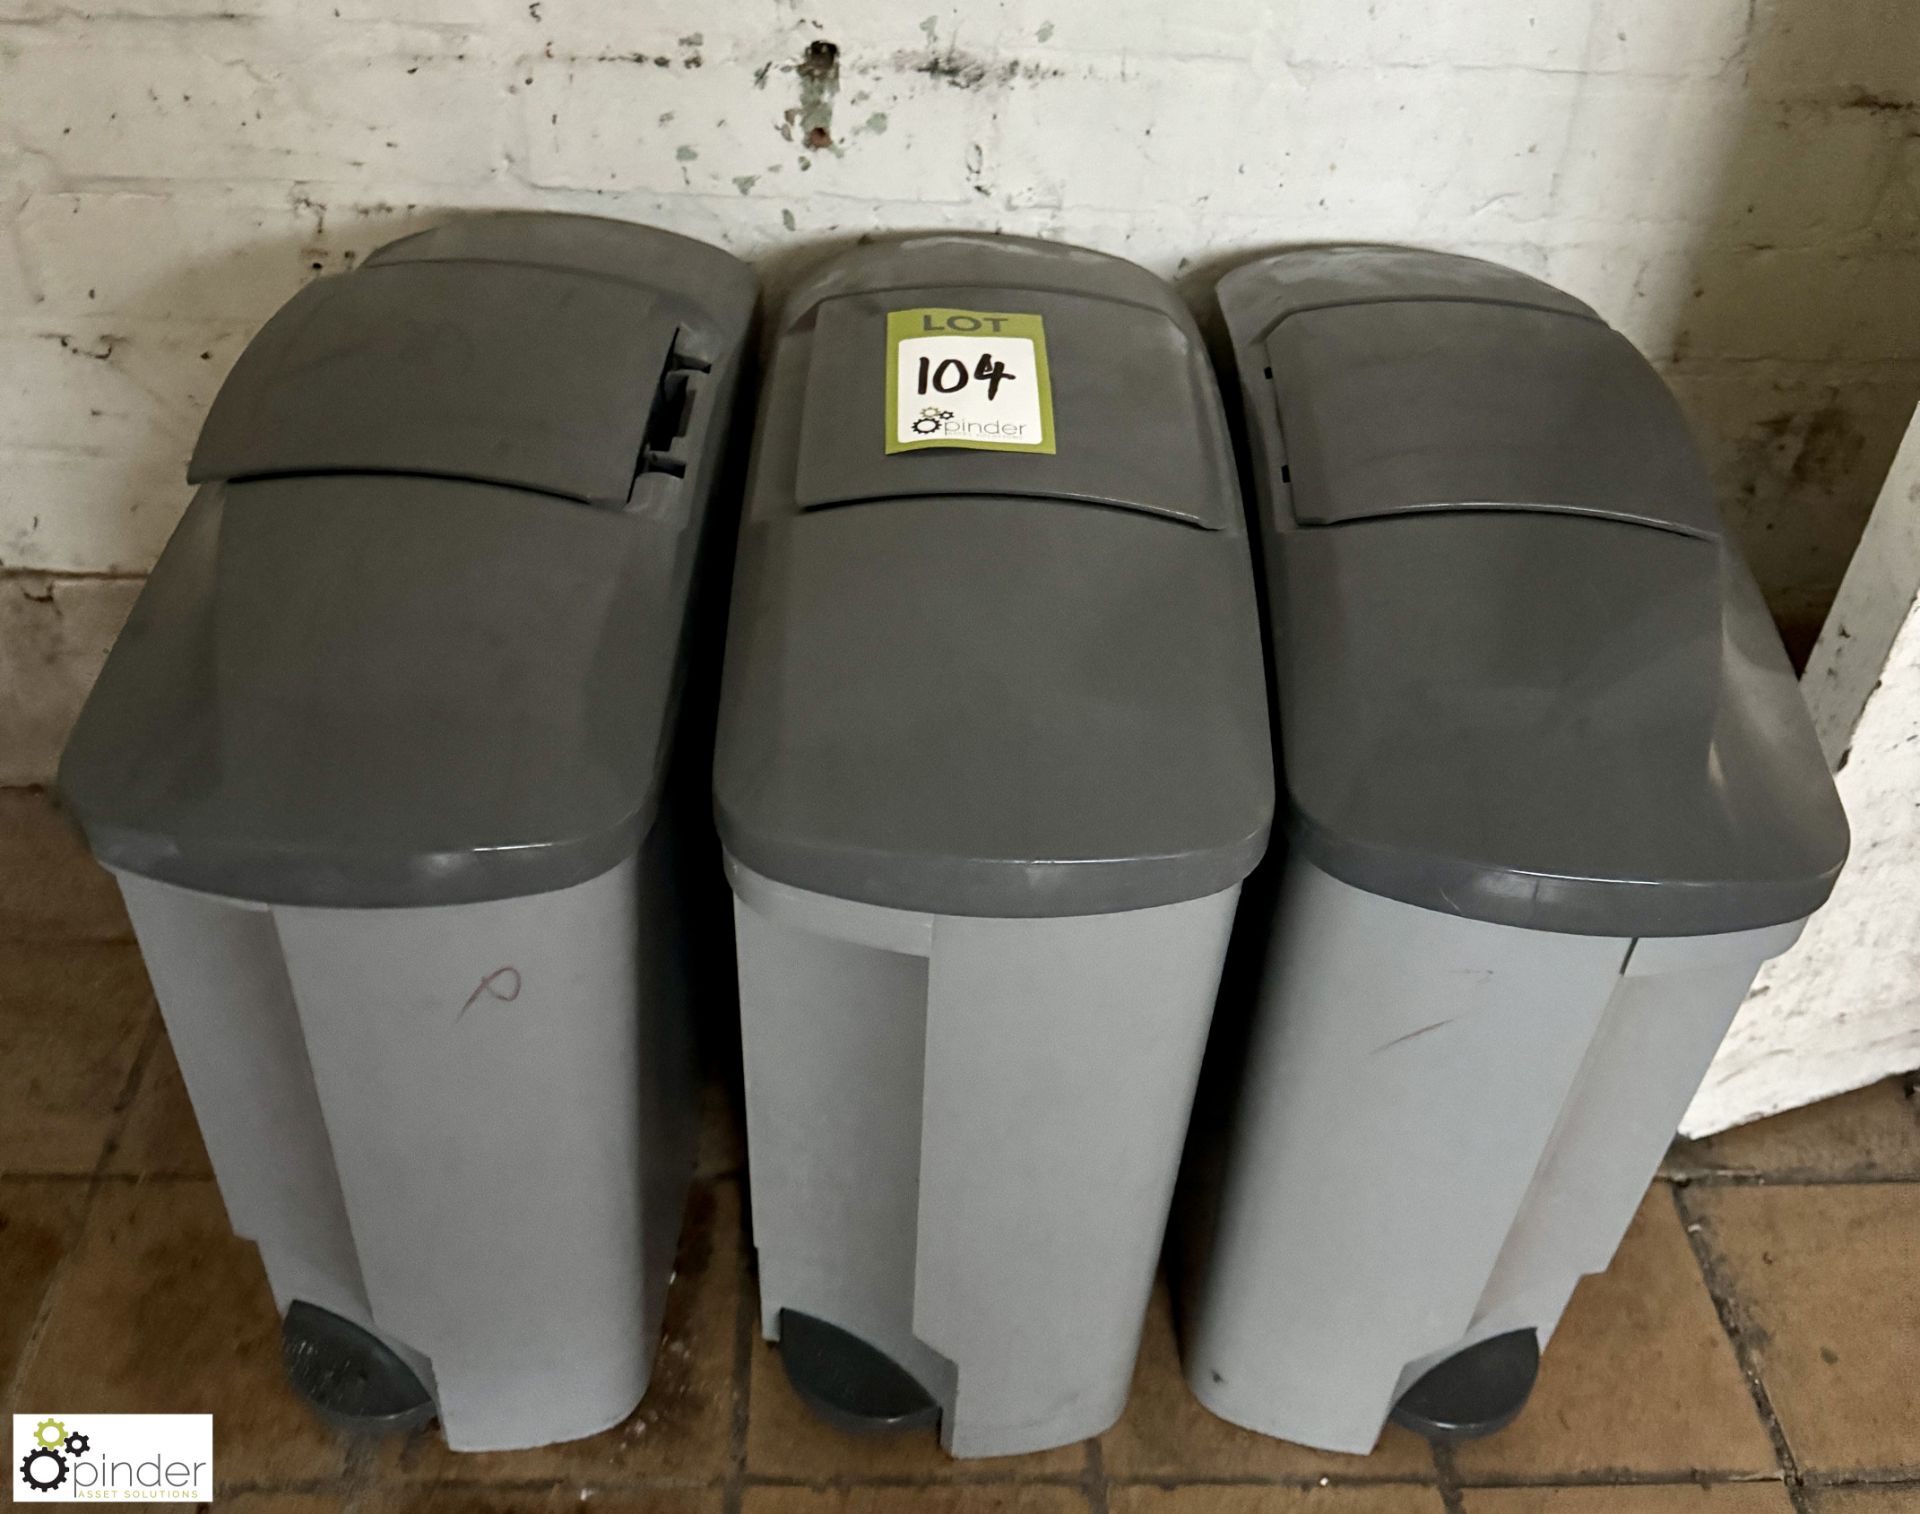 Quantity Waste Bins, unused - Image 3 of 6